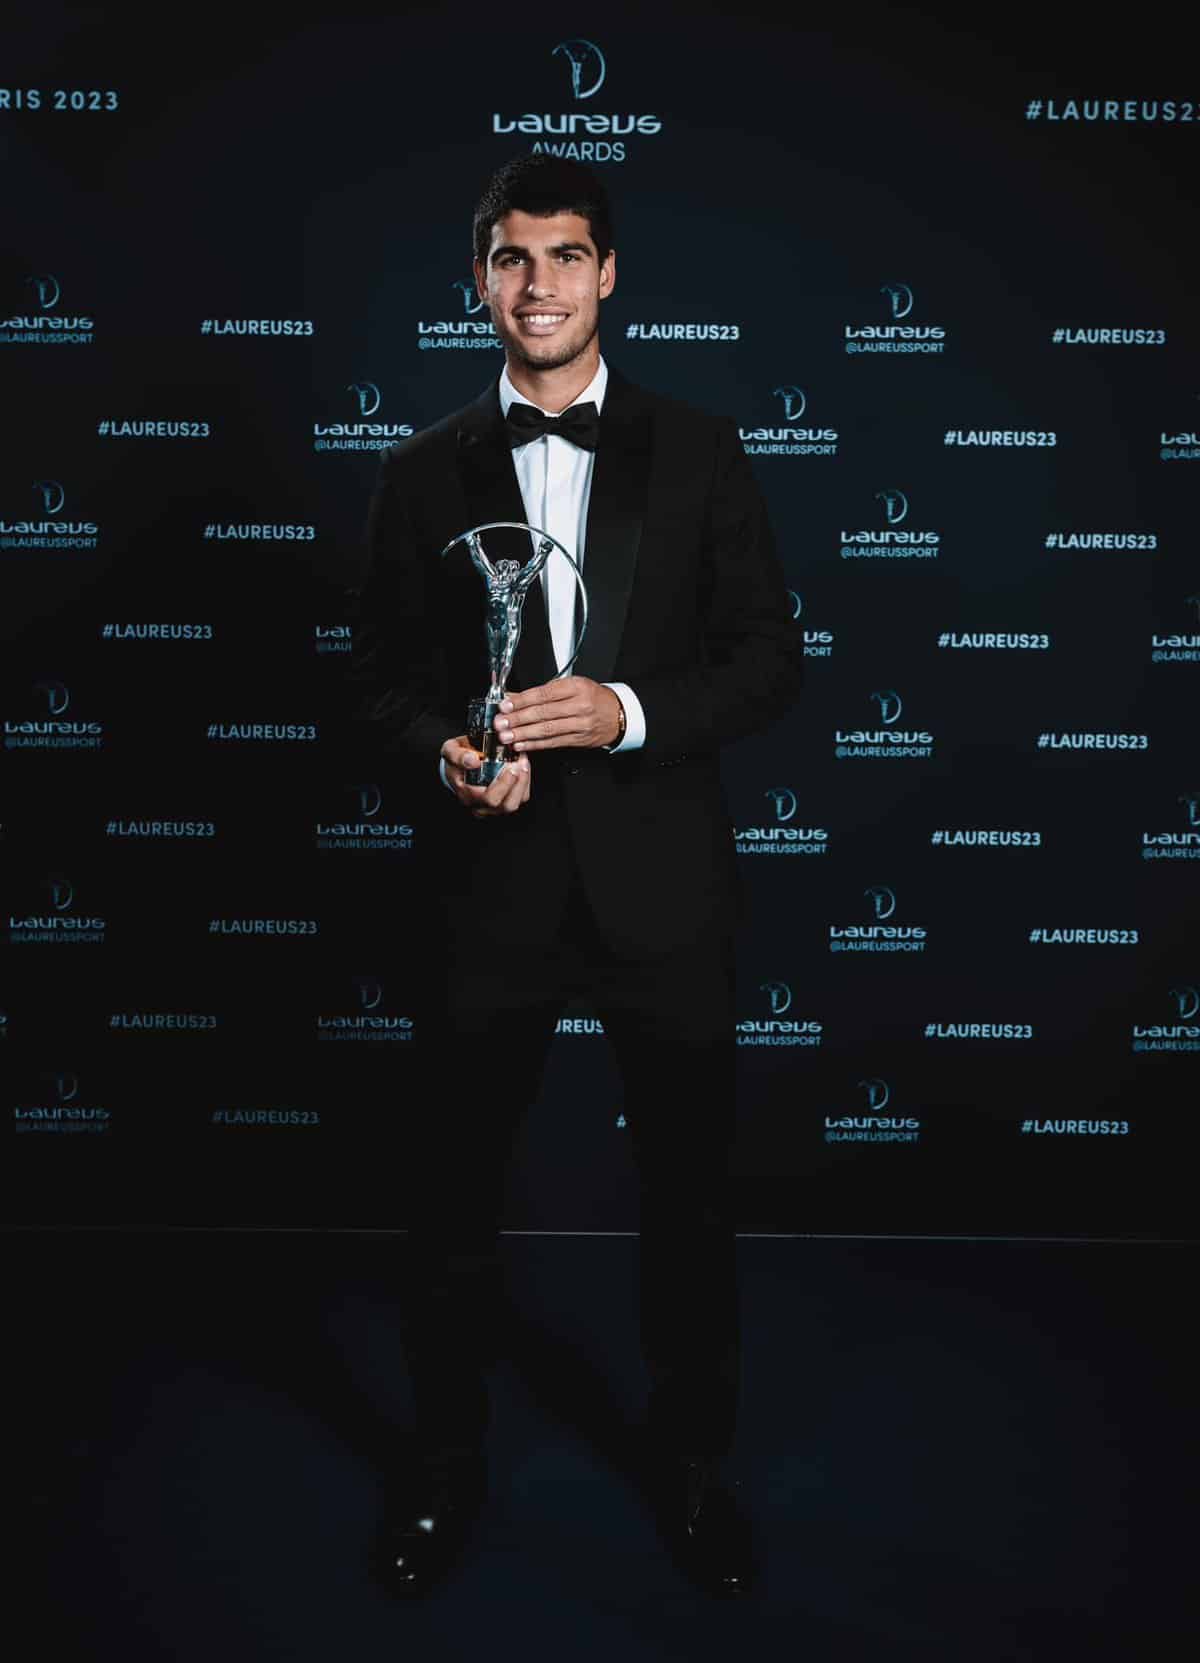 Louis Vuitton Signs Tennis Player Carlos Alcaraz as Brand